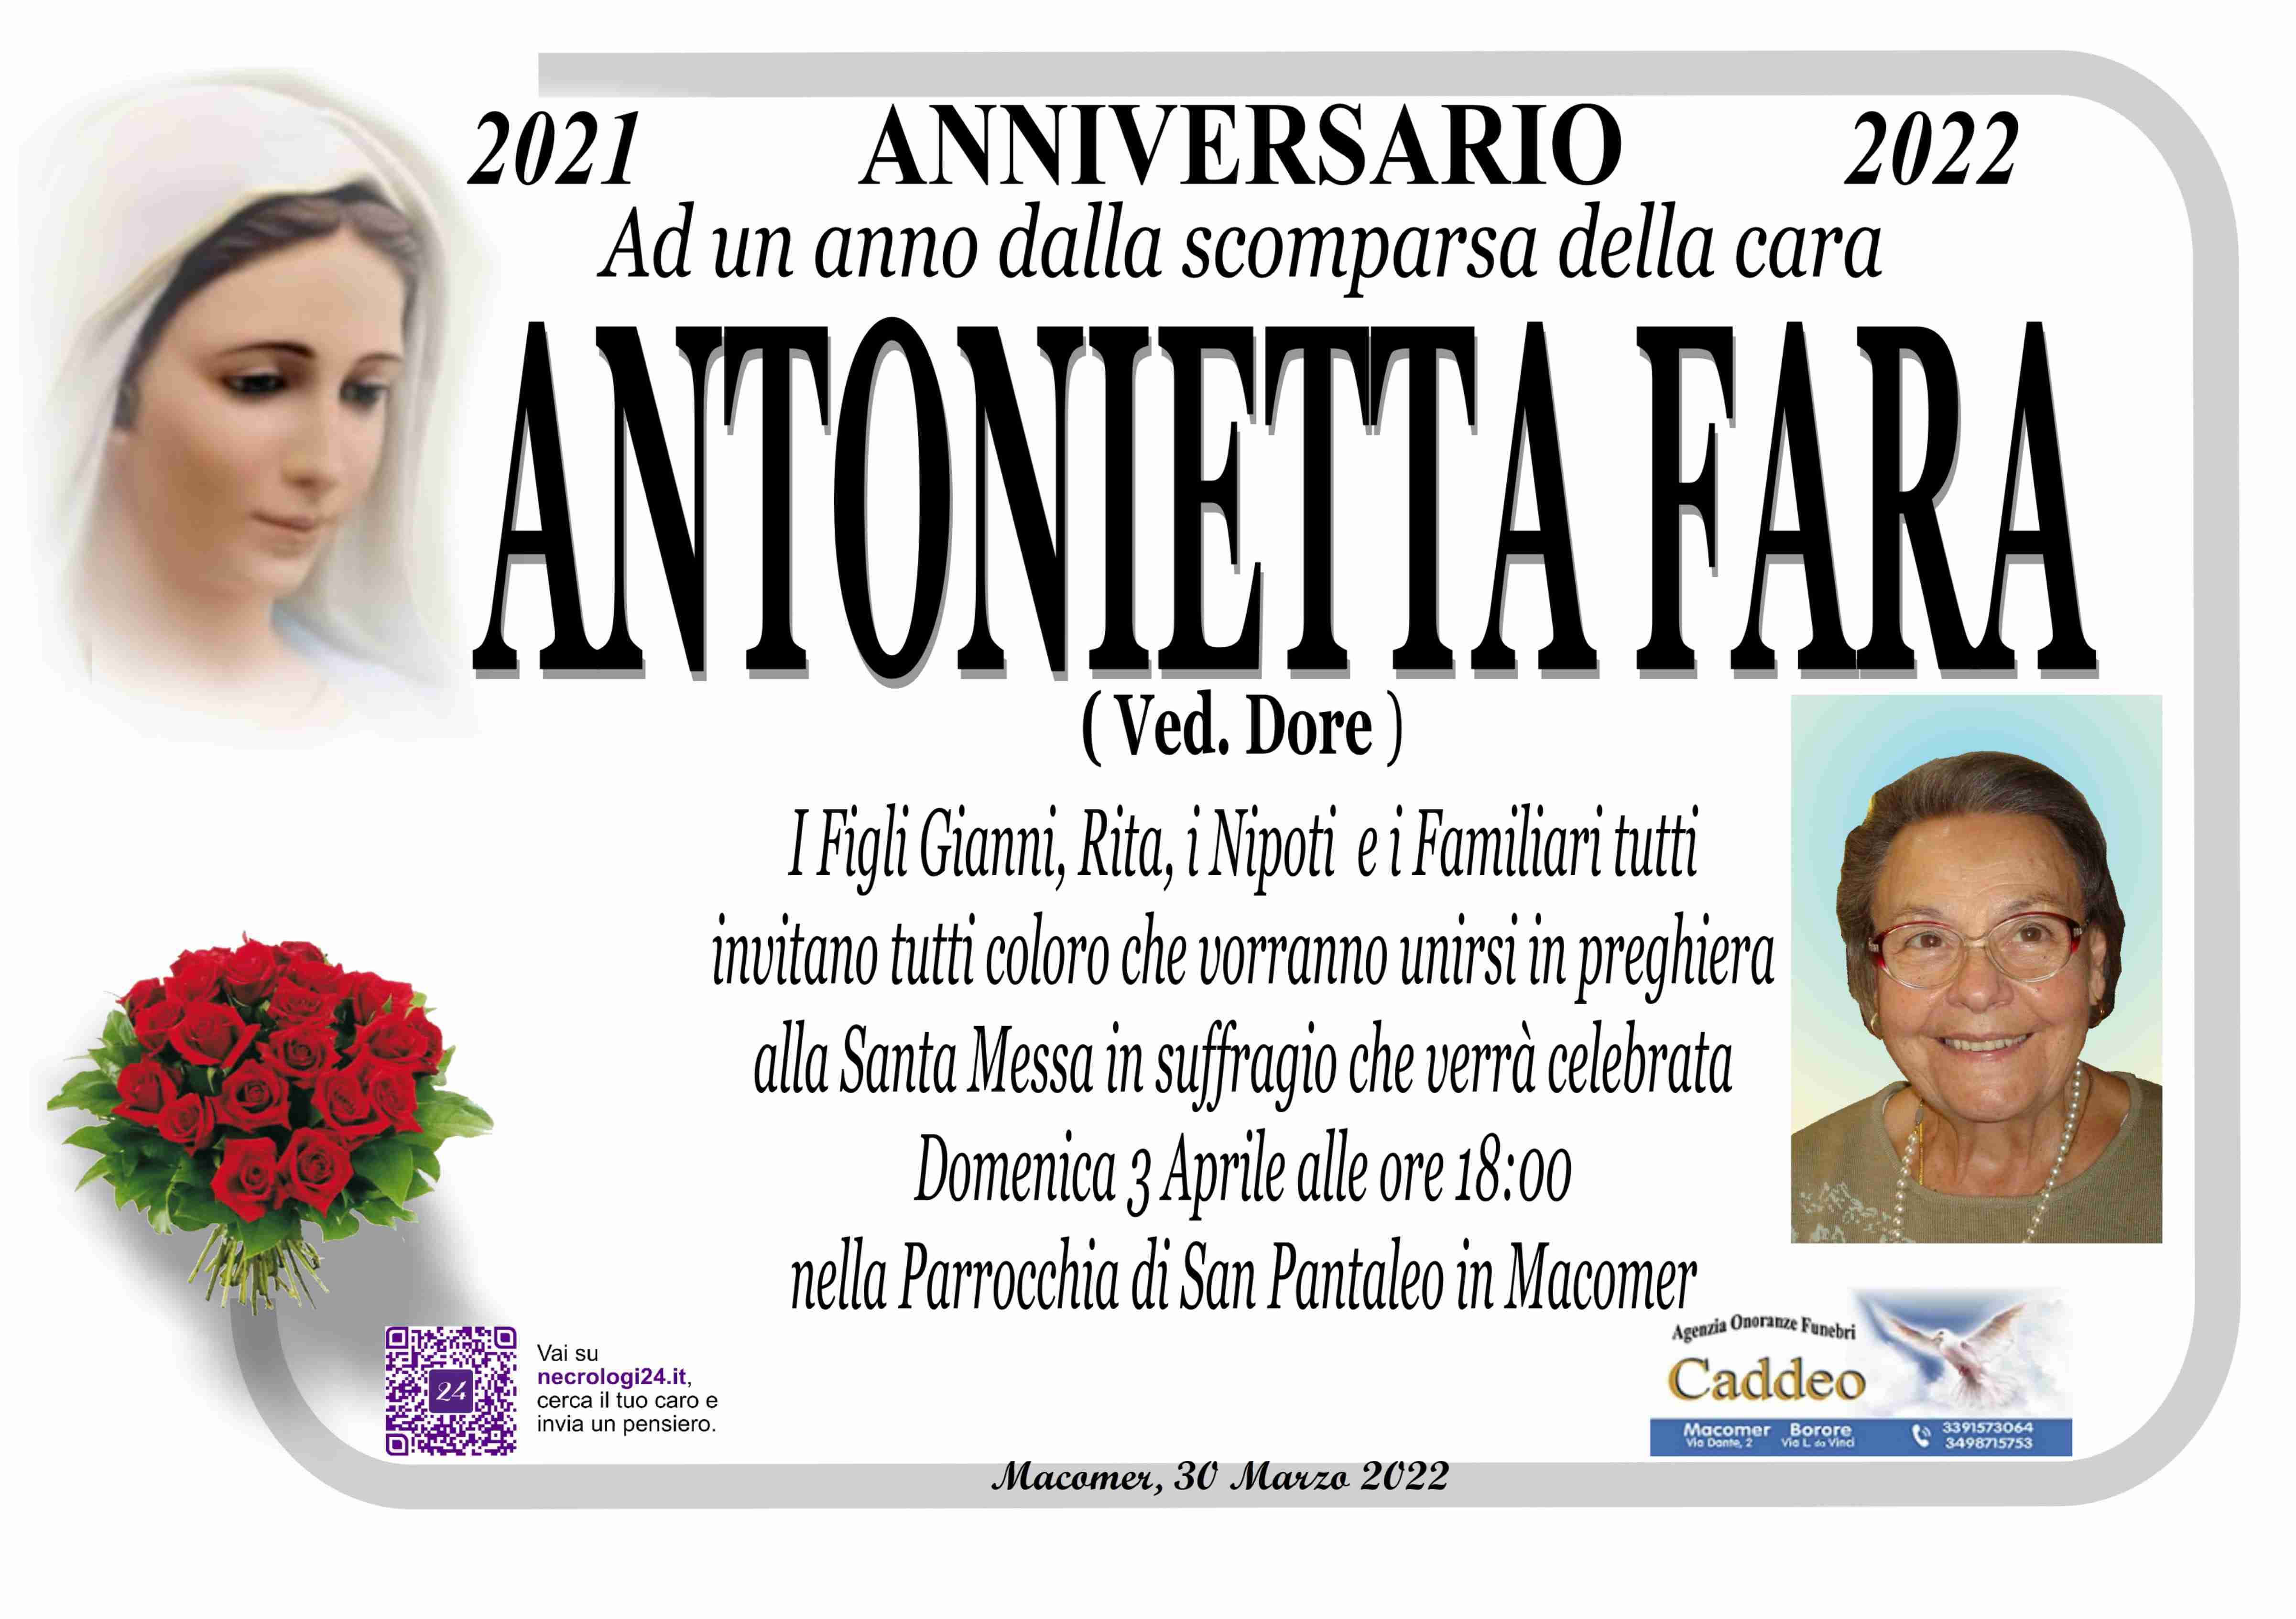 Antonietta Fara